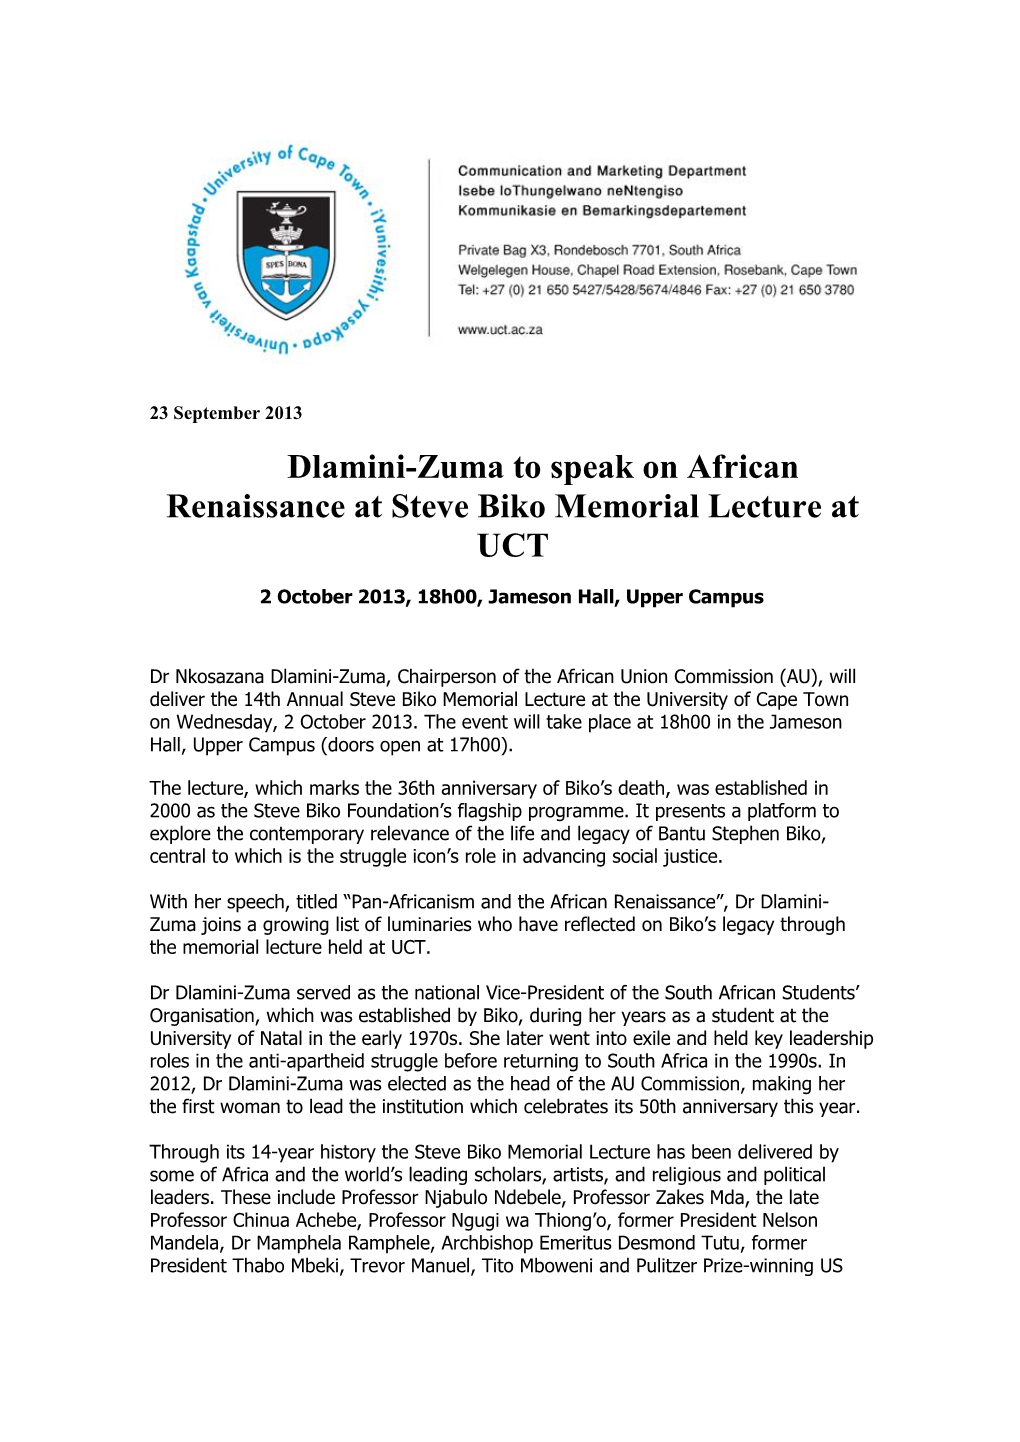 Dlamini-Zuma to Speak on African Renaissance at Steve Biko Memorial Lecture at UCT